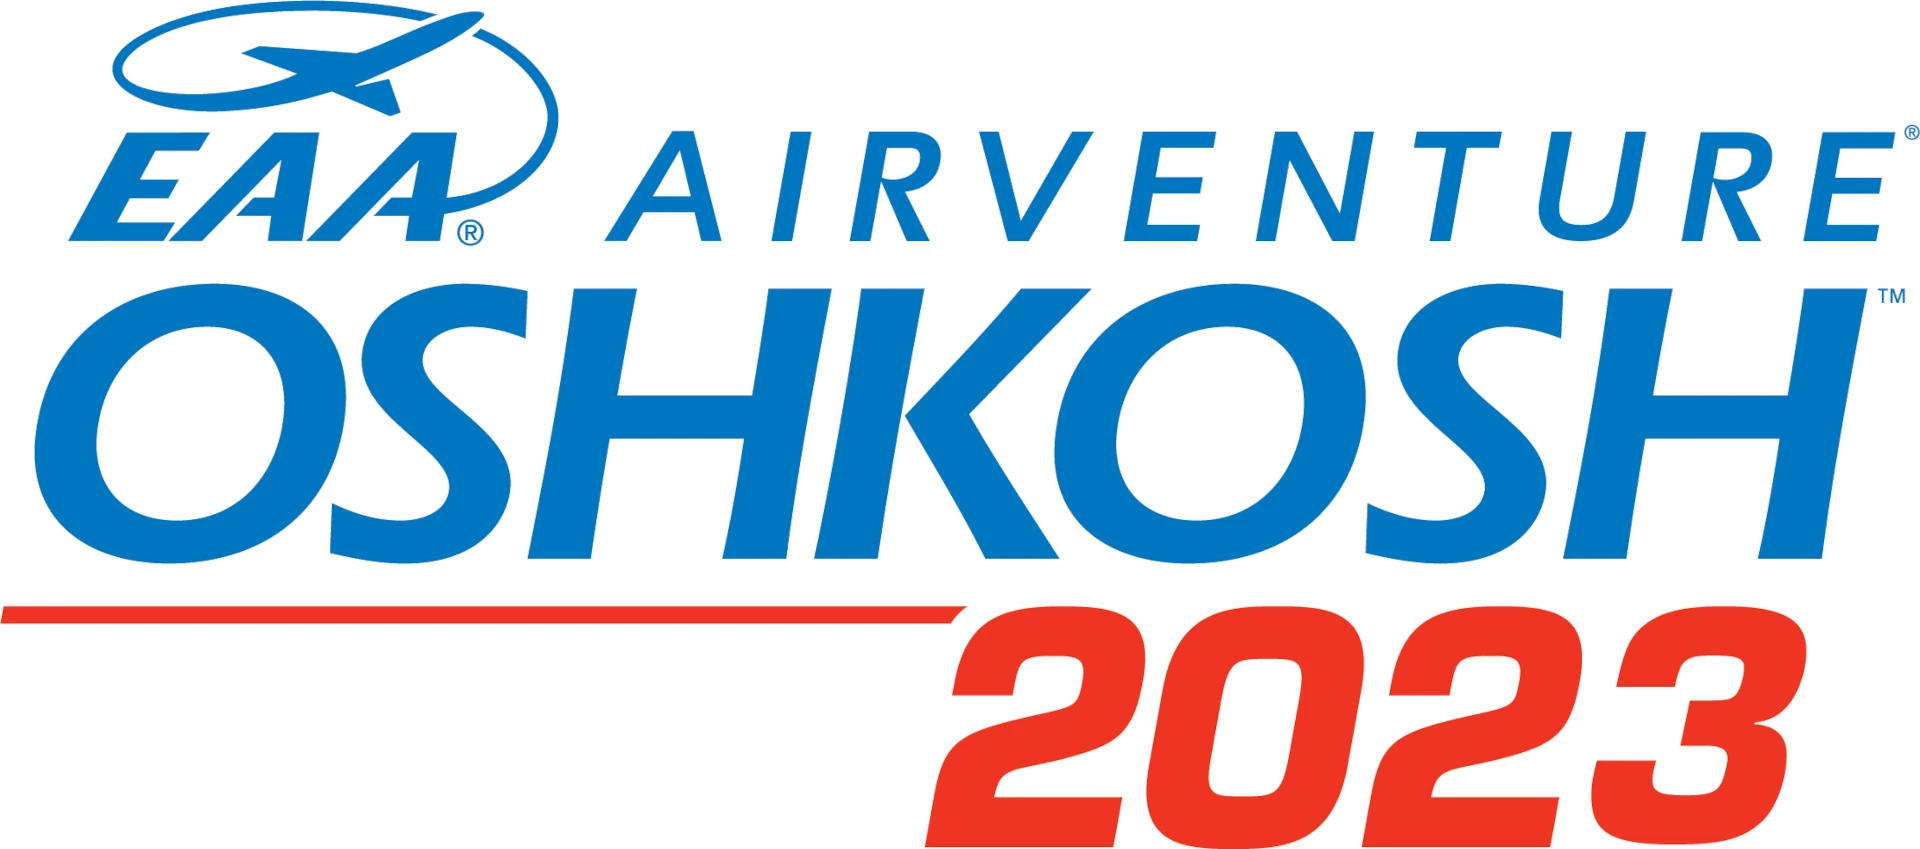 EAA Airventure Oshkosh 2023